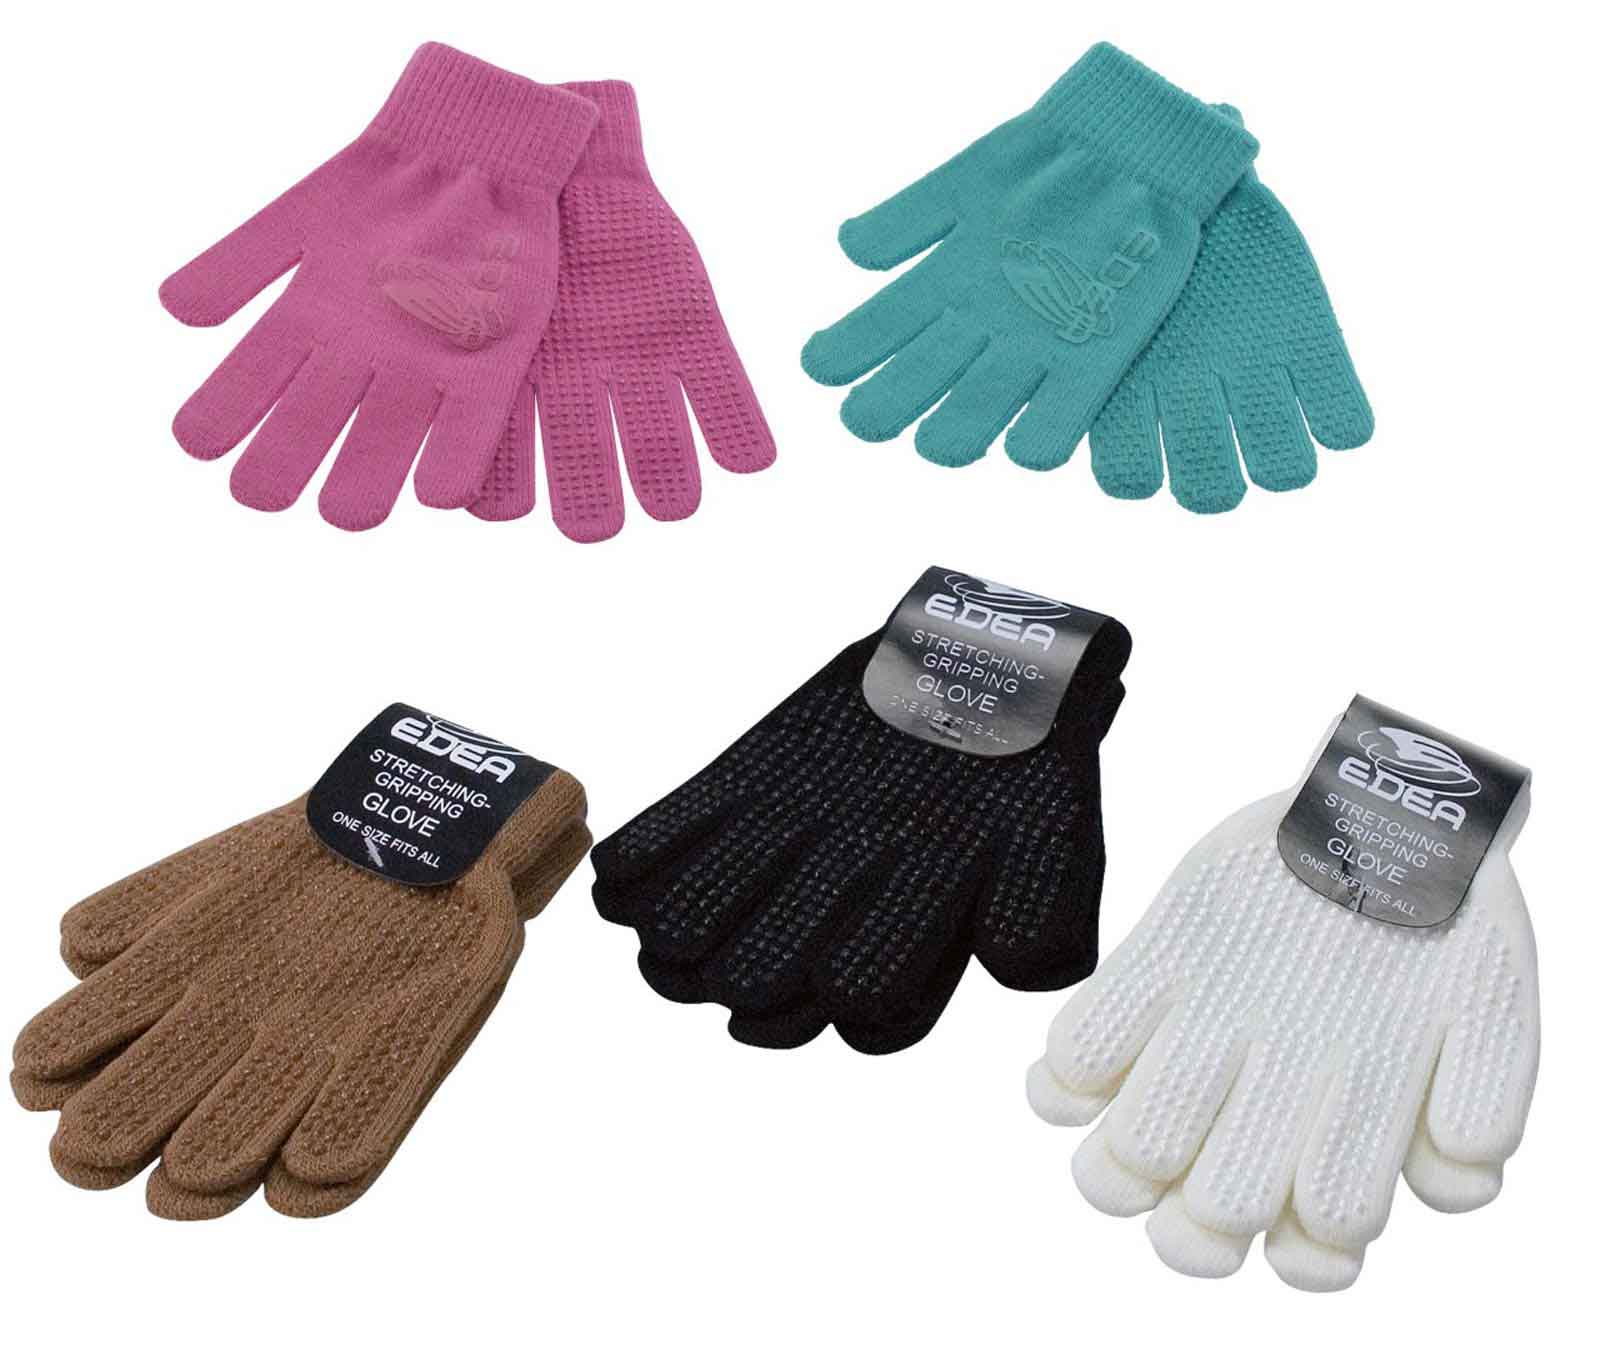 Edea Gripping gloves